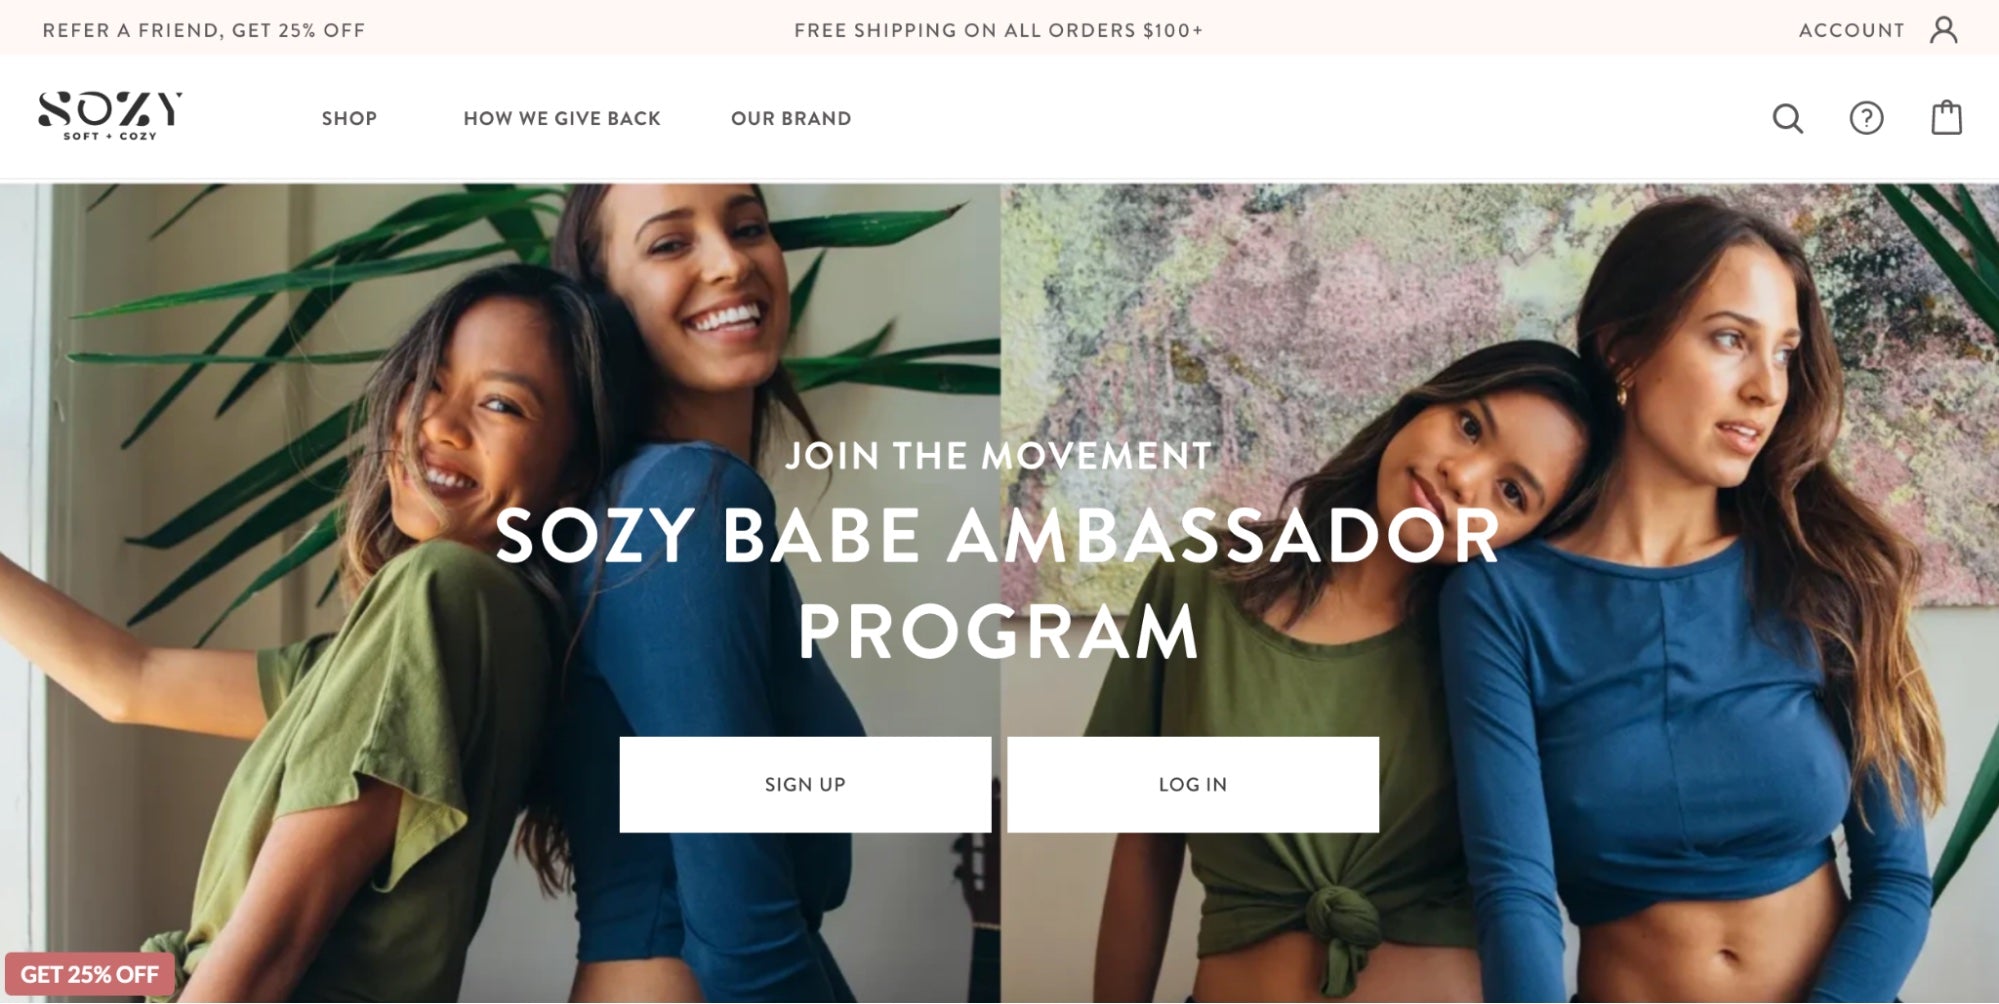 Sozy brand ambassadors